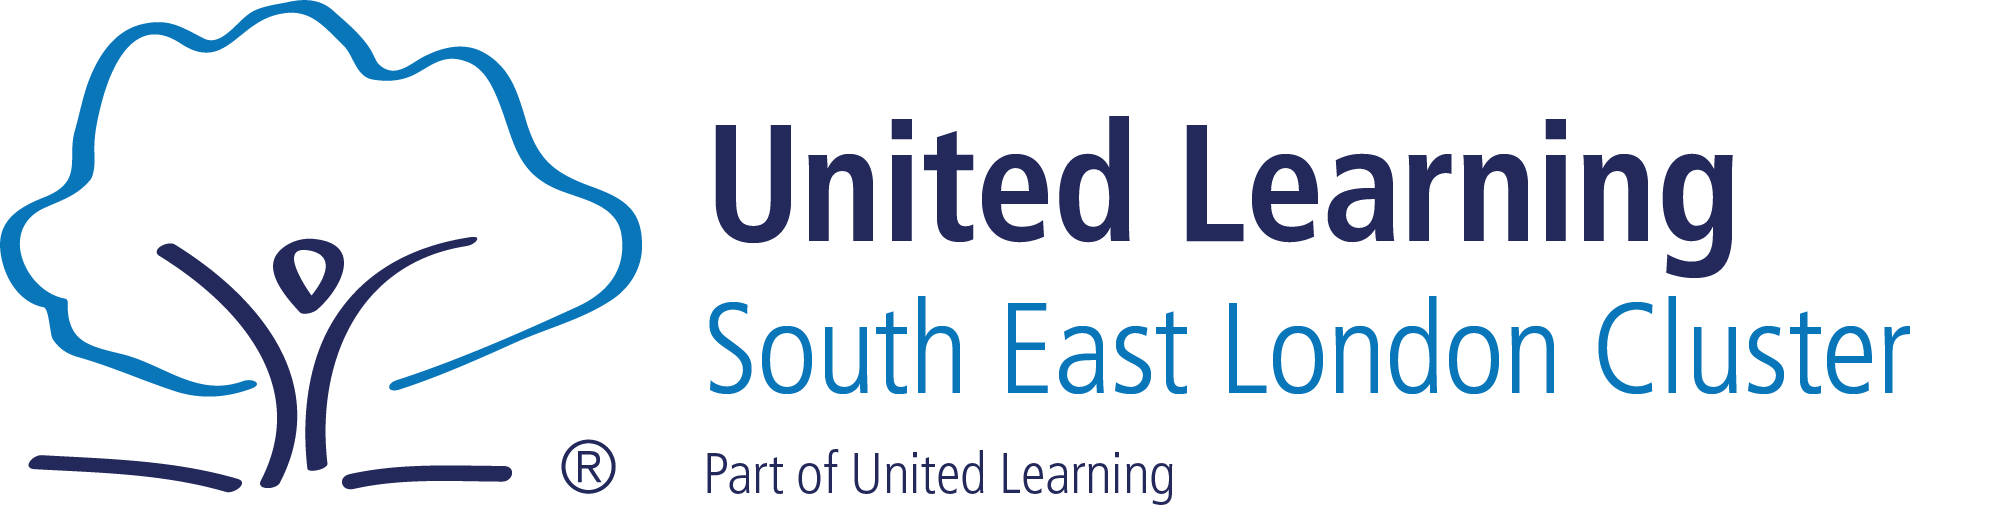 South East London Cluster Logo